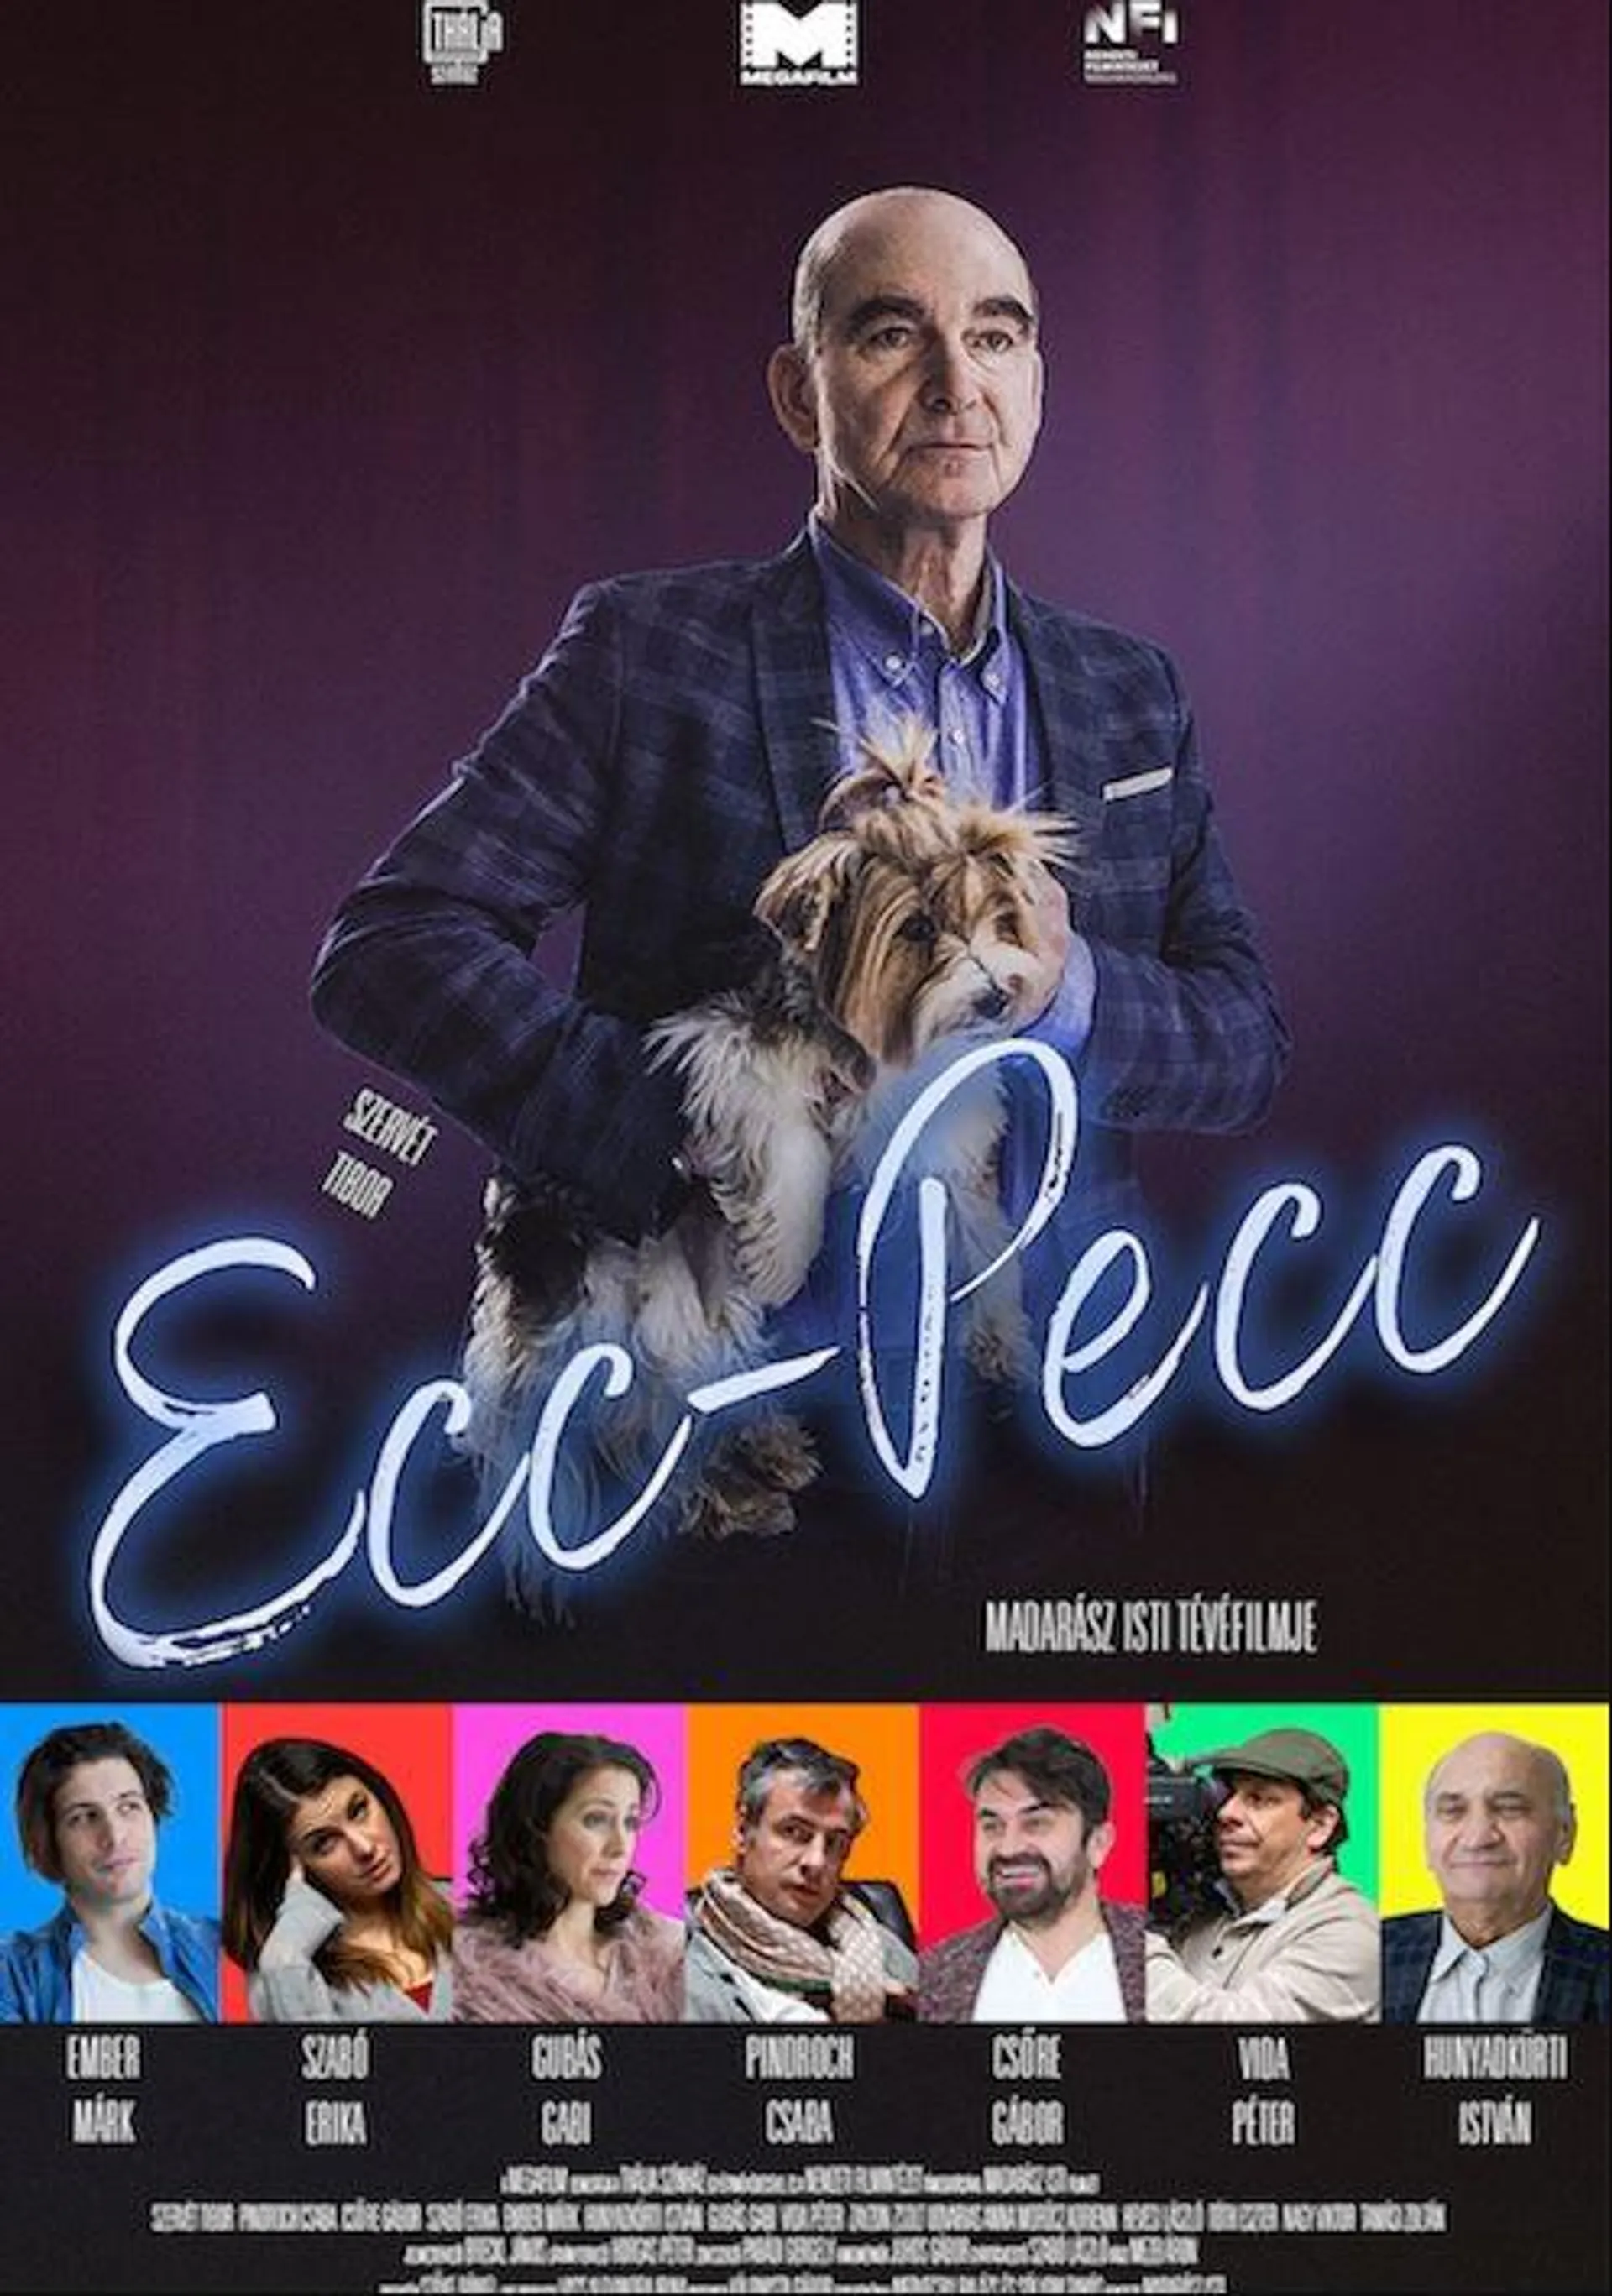 Ecc-Pecc - DVD